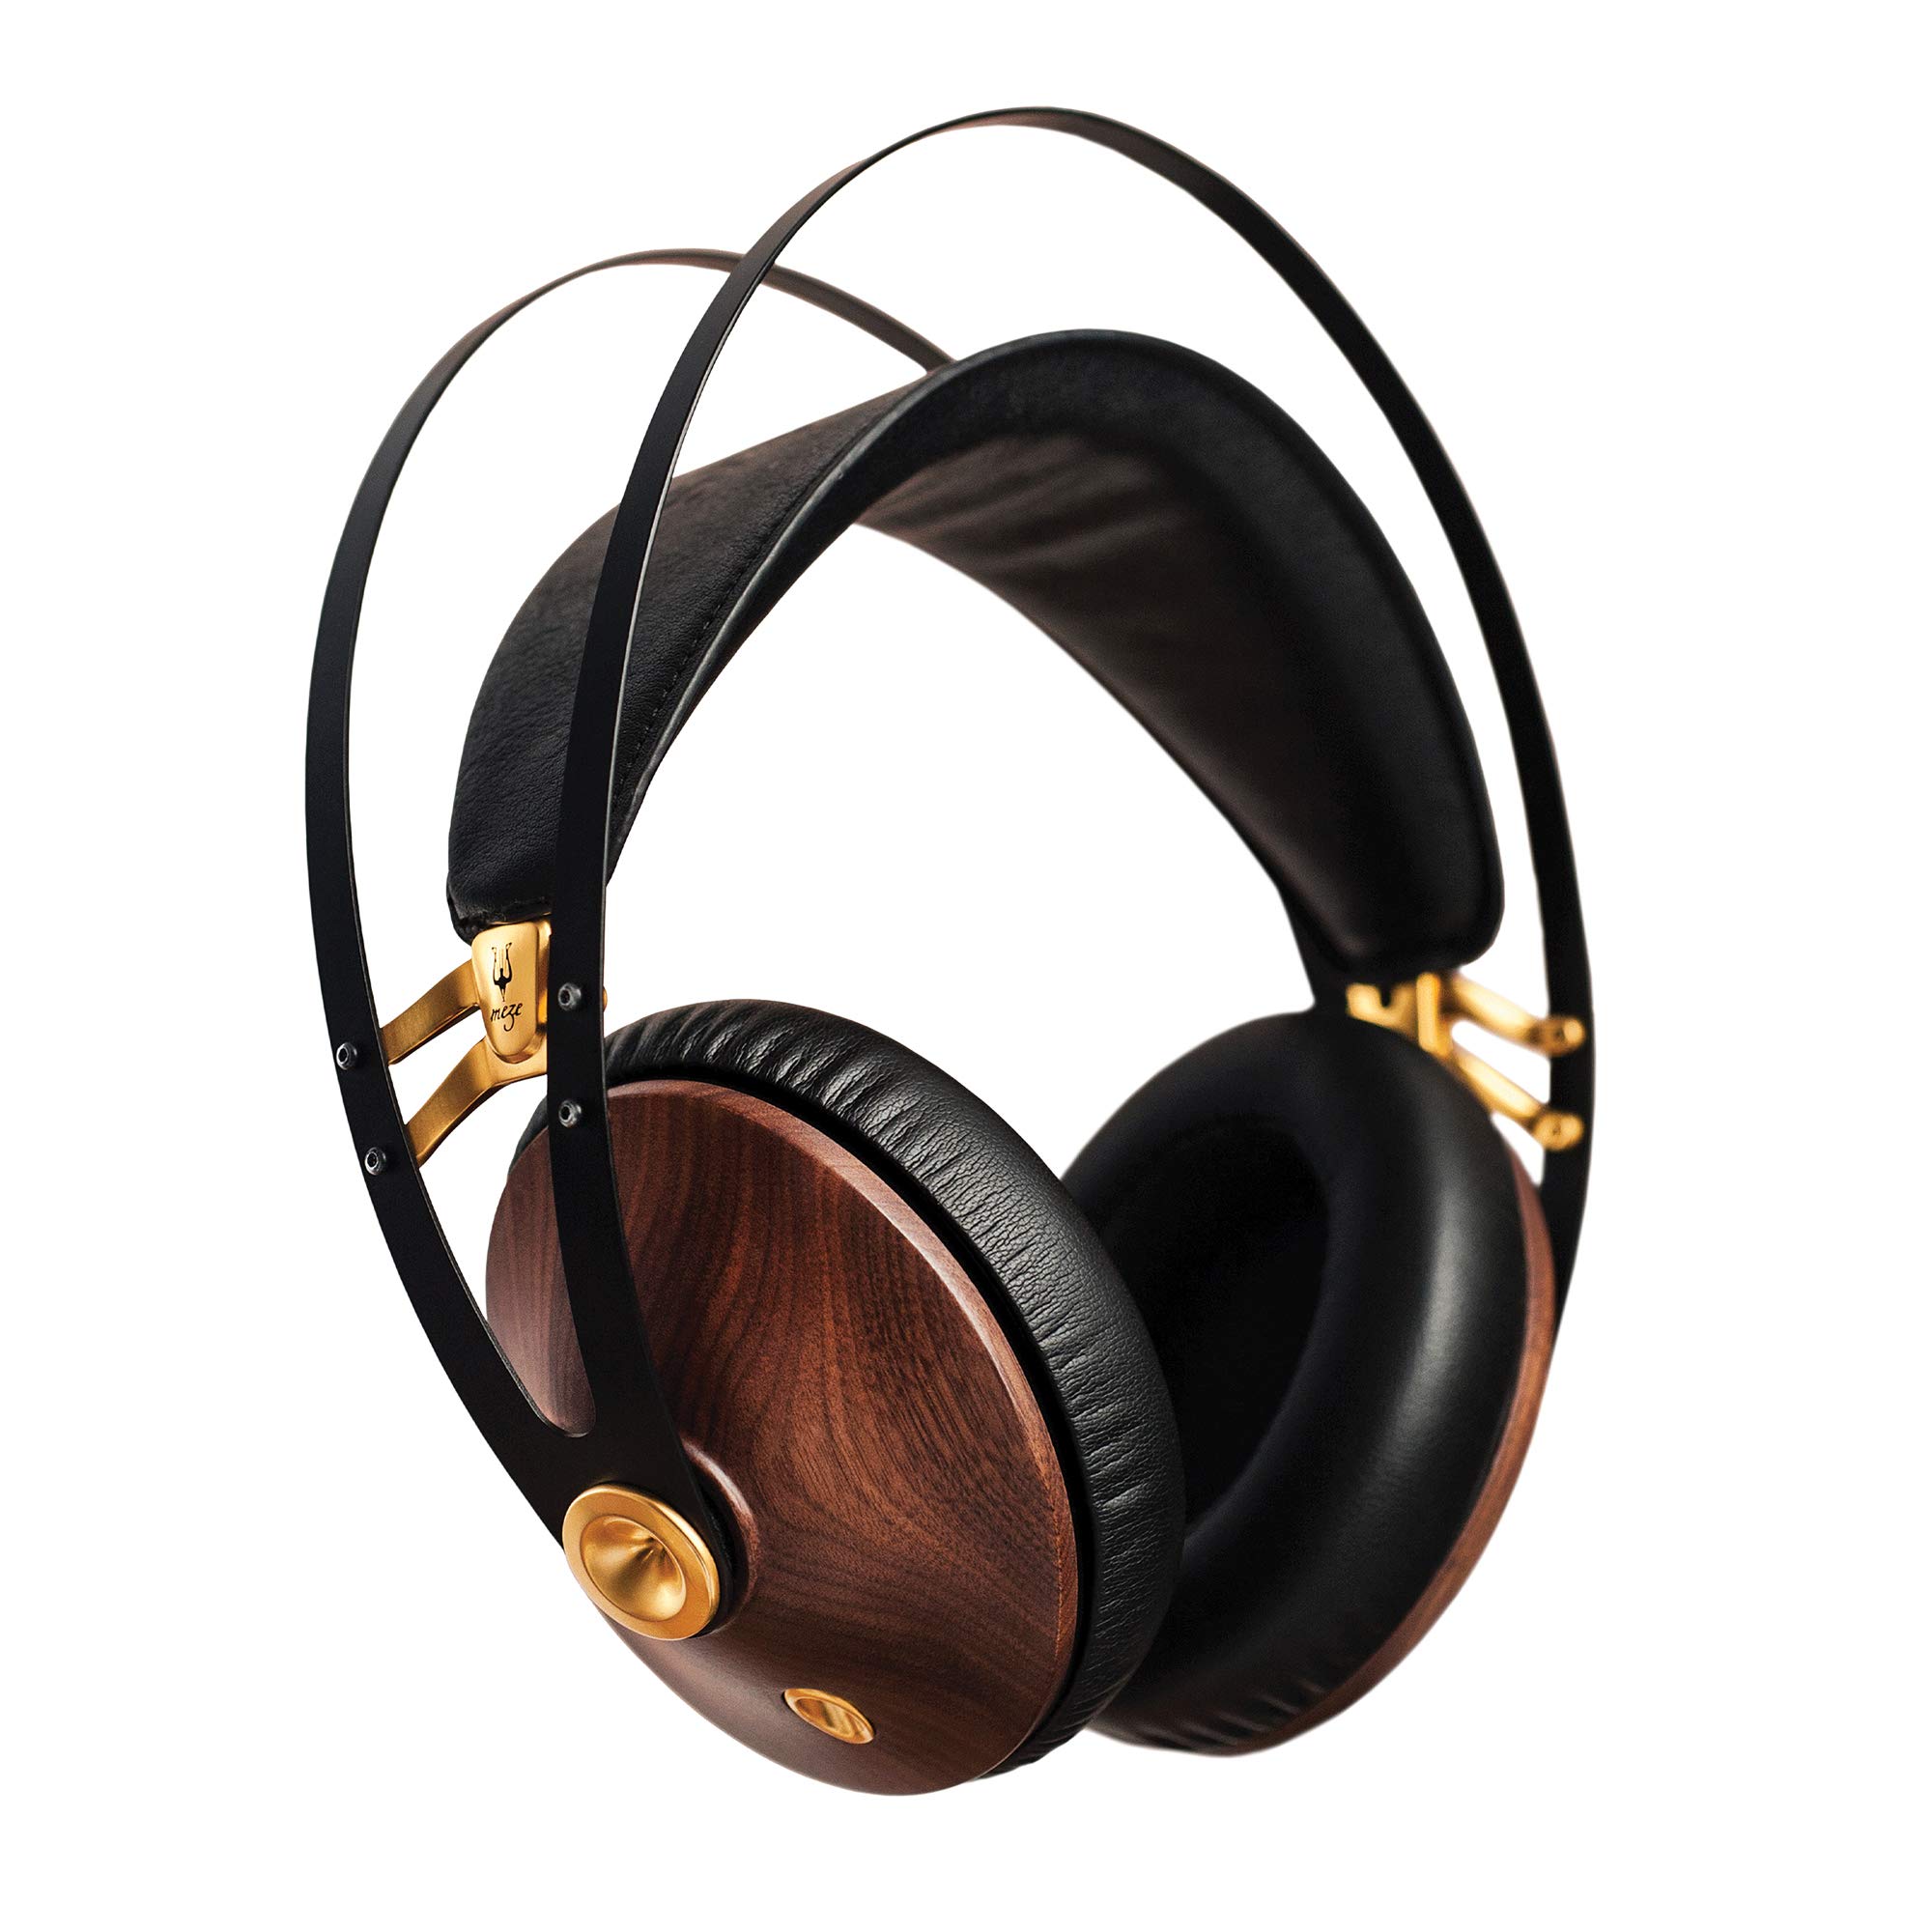 Meze Headphones Meze 99 经典胡桃金 |带麦克风和可自动调节头带的有线包耳式耳机 |适合...